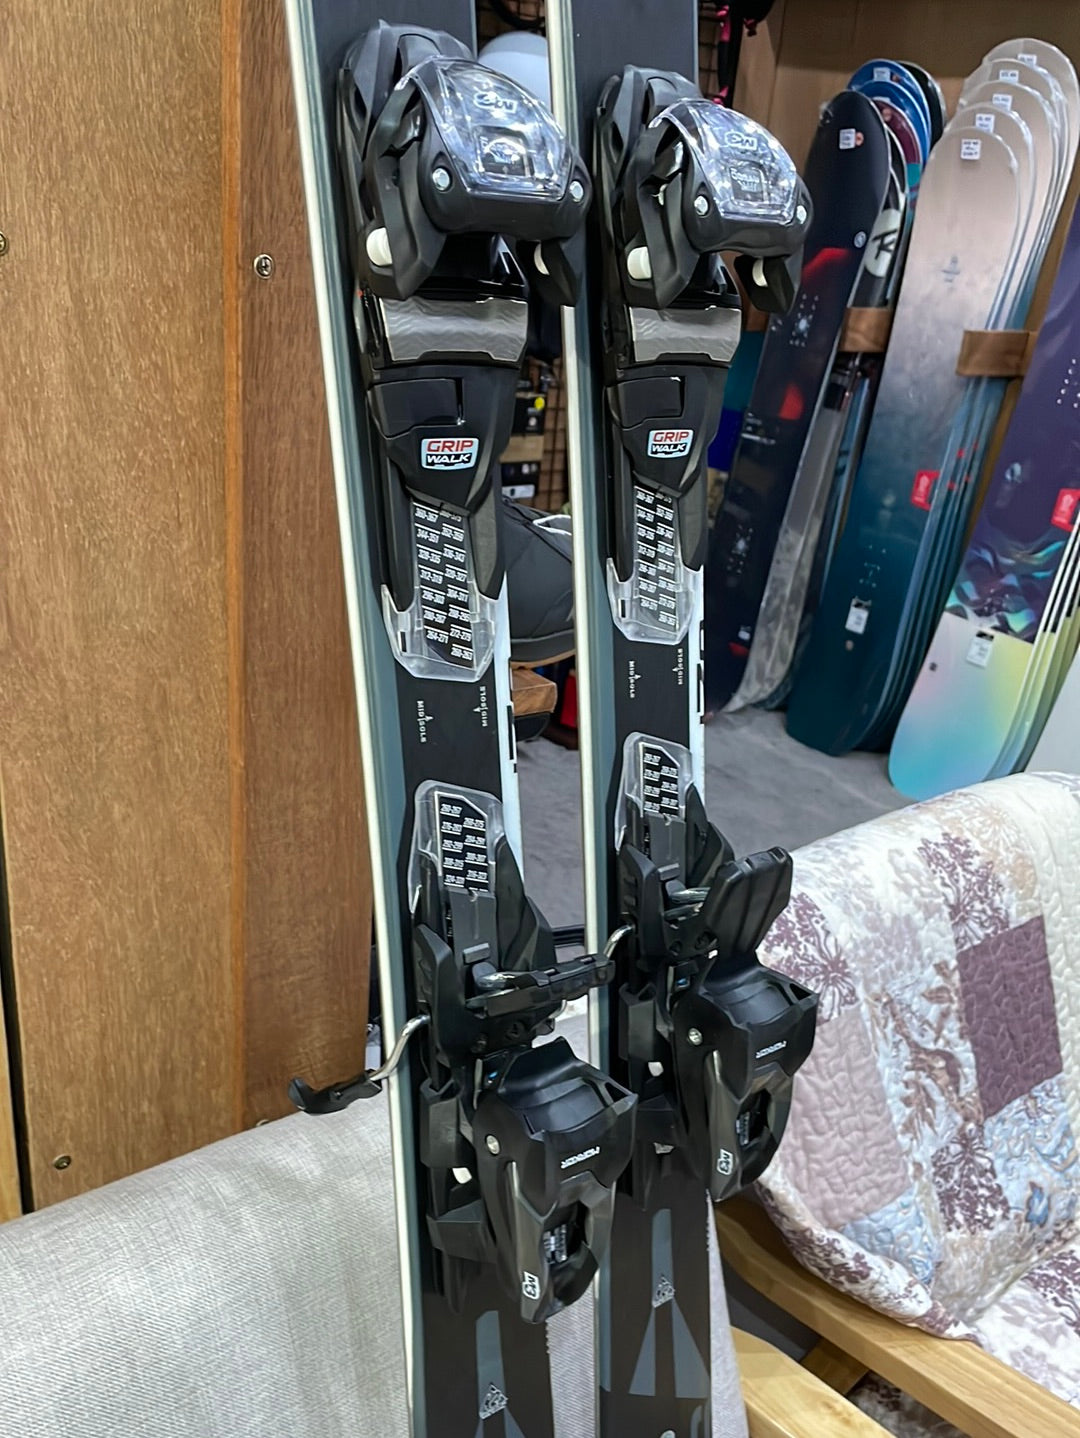 Skis K2 Konic 76 Skis + M3 10 Compact Quickclick Bindings 170cm